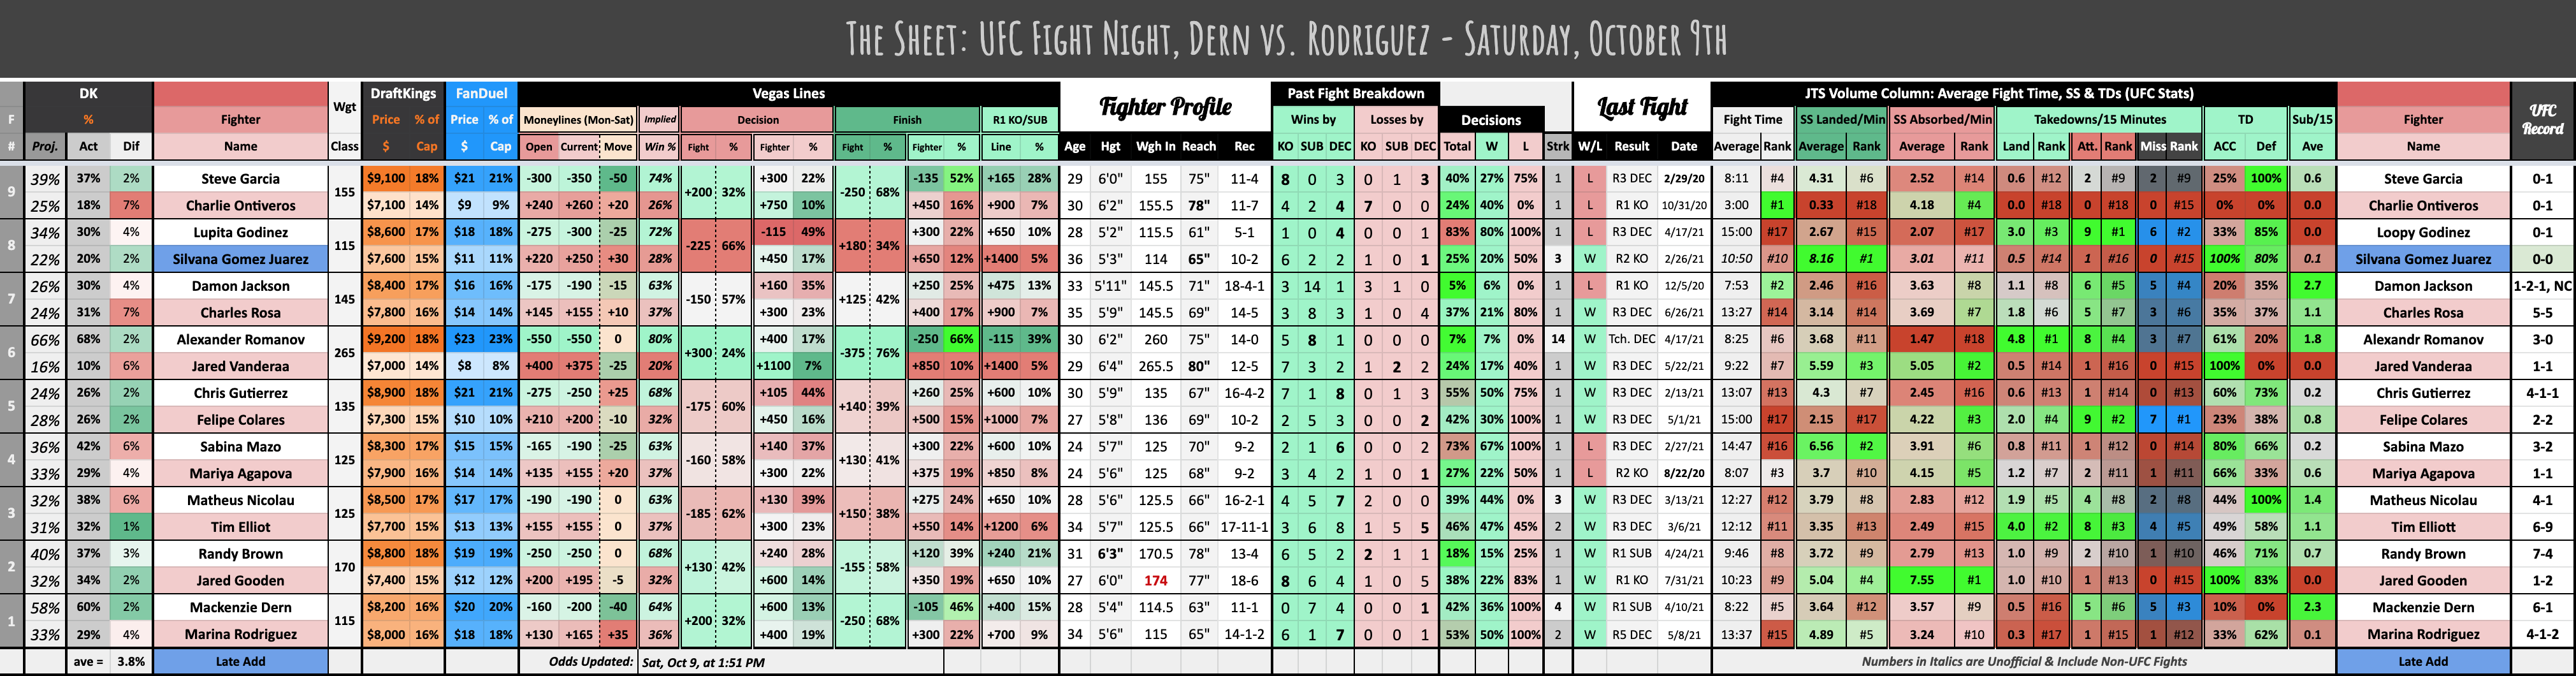 UFC Fight Night, Dern vs. Rodriguez - Saturday, October 9th